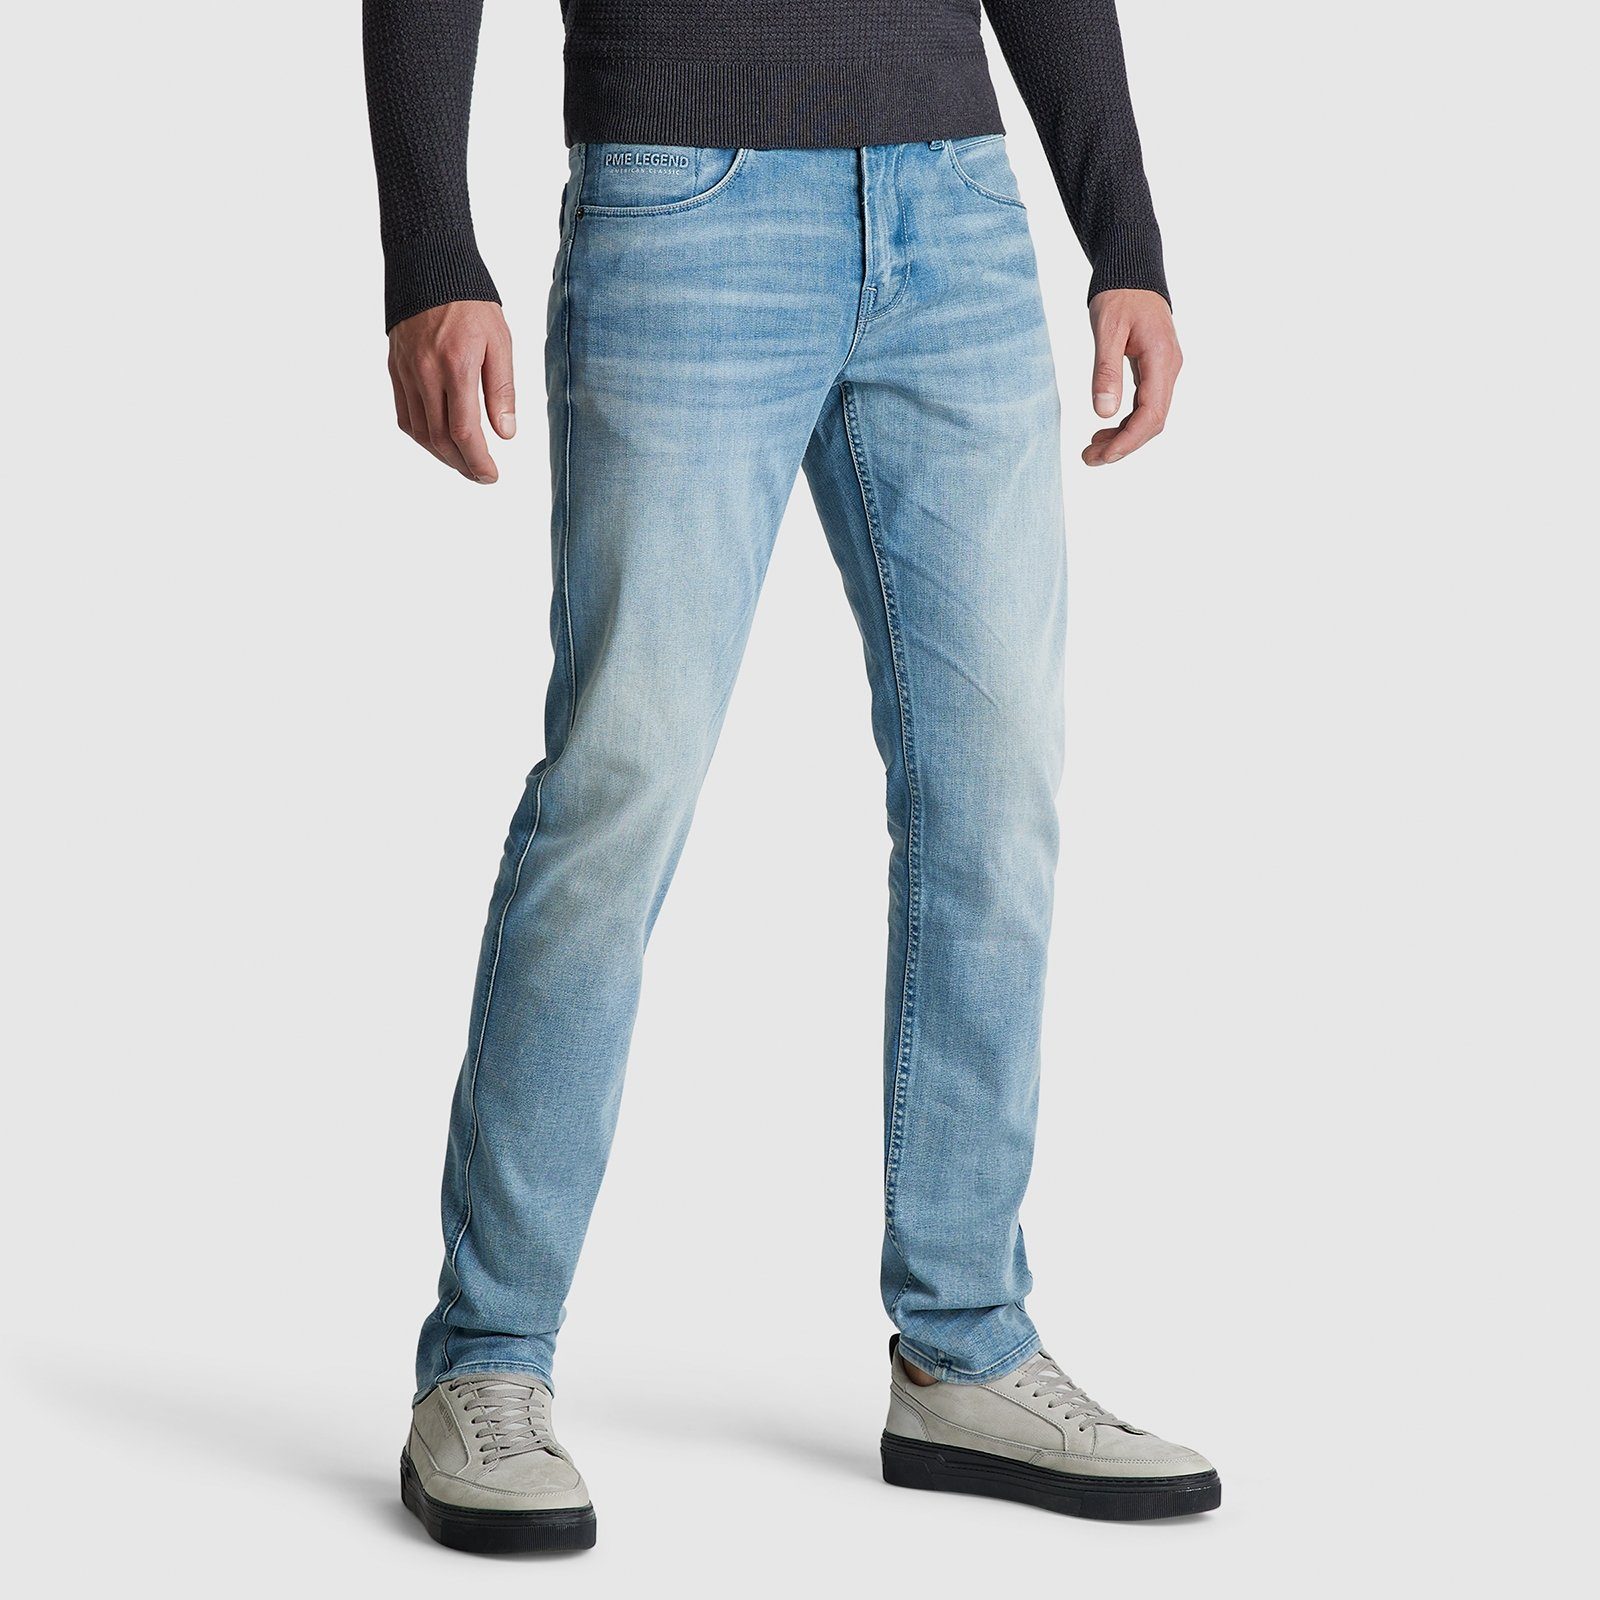 LEGEND BRIGH NIGHTFLIGHT JEANS PME 5-Pocket-Jeans LEGEND PME